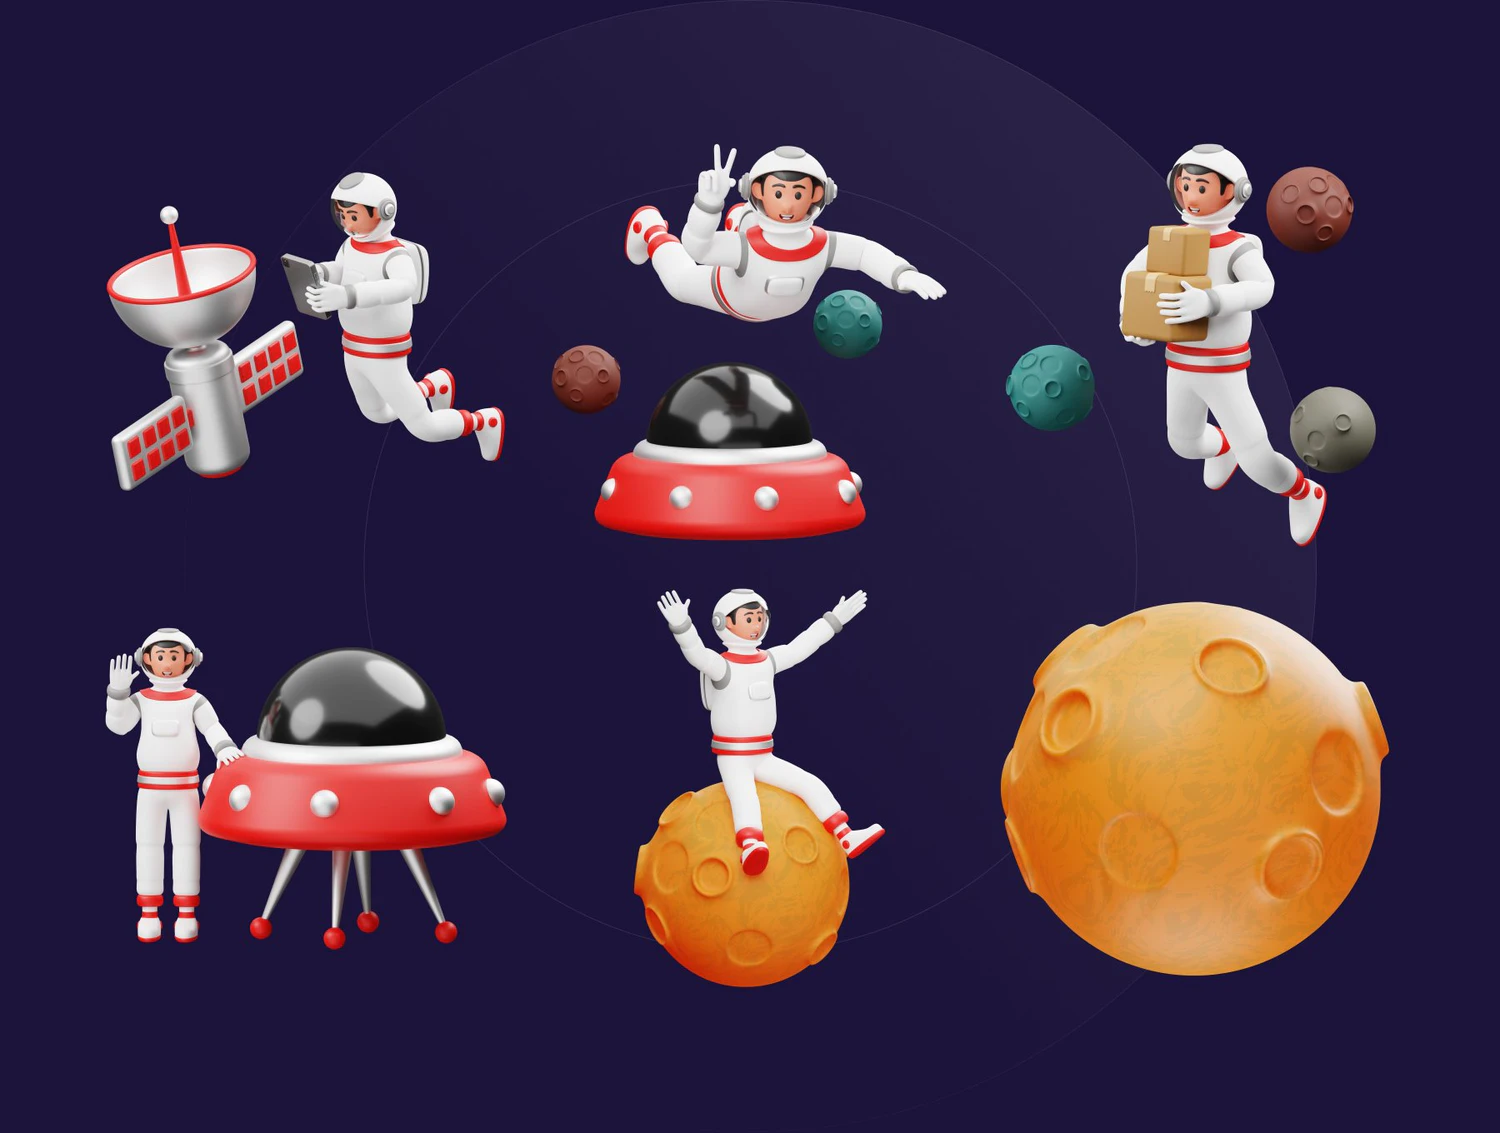 4612 18款高级独特太空宇航员3D插画插图图标Icons设计素材包 Astronaut 3D Character Illustration@GOOODME.COM